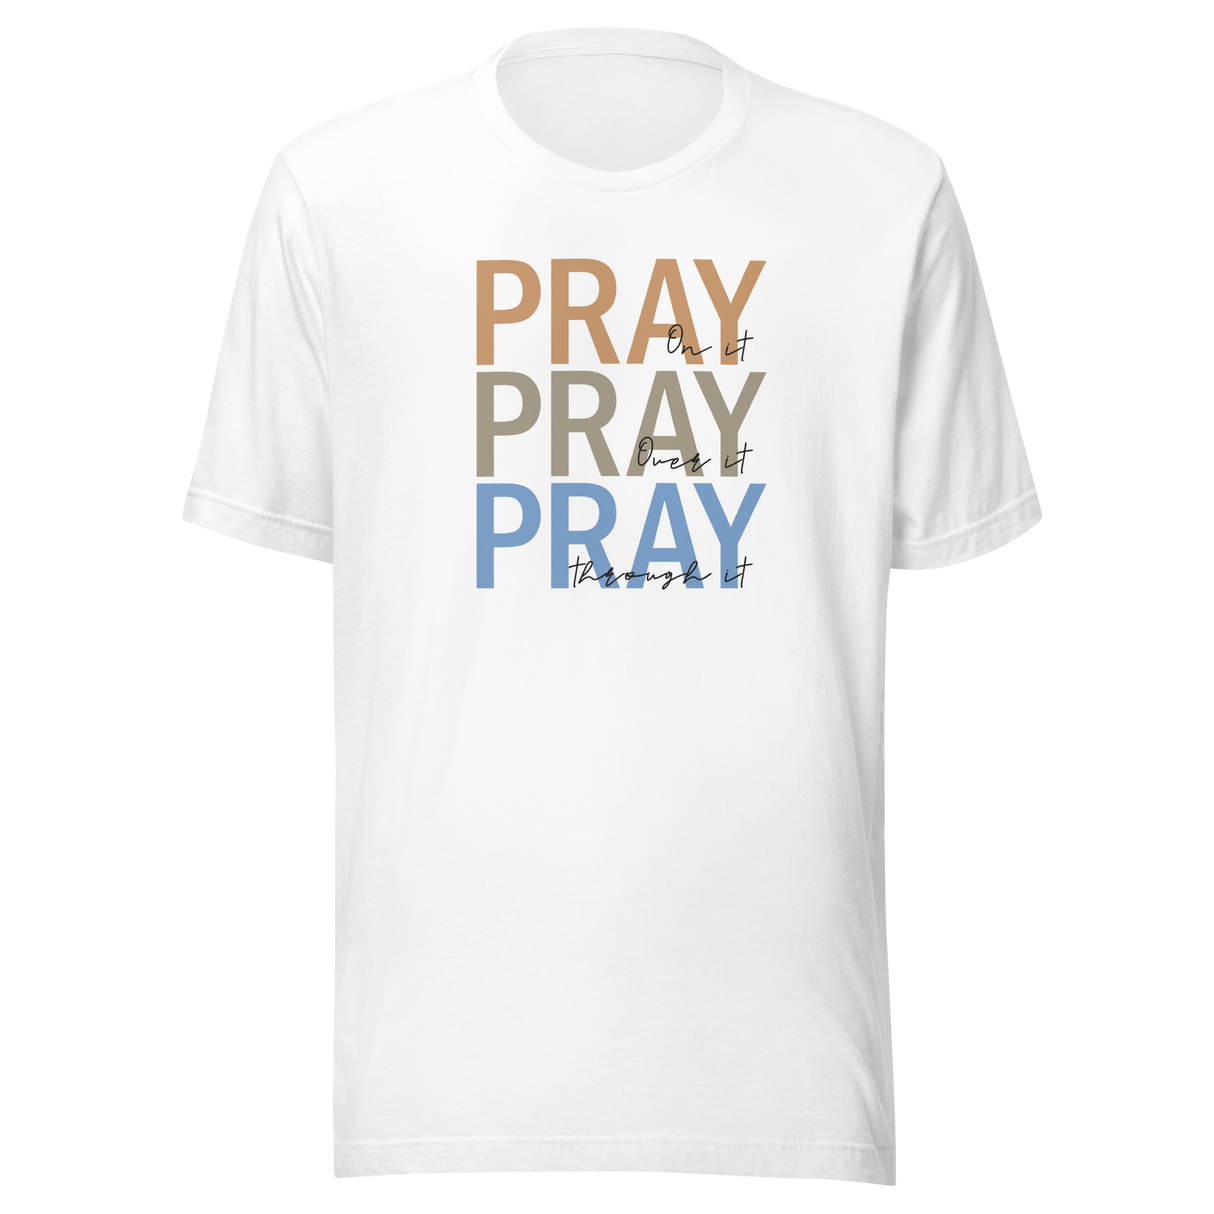 Pray On It Pray Over It Pray Through It - Faith Tee - Pray T-Shirt - Faith Tee - Spirituality T-Shirt - Devotion Tee